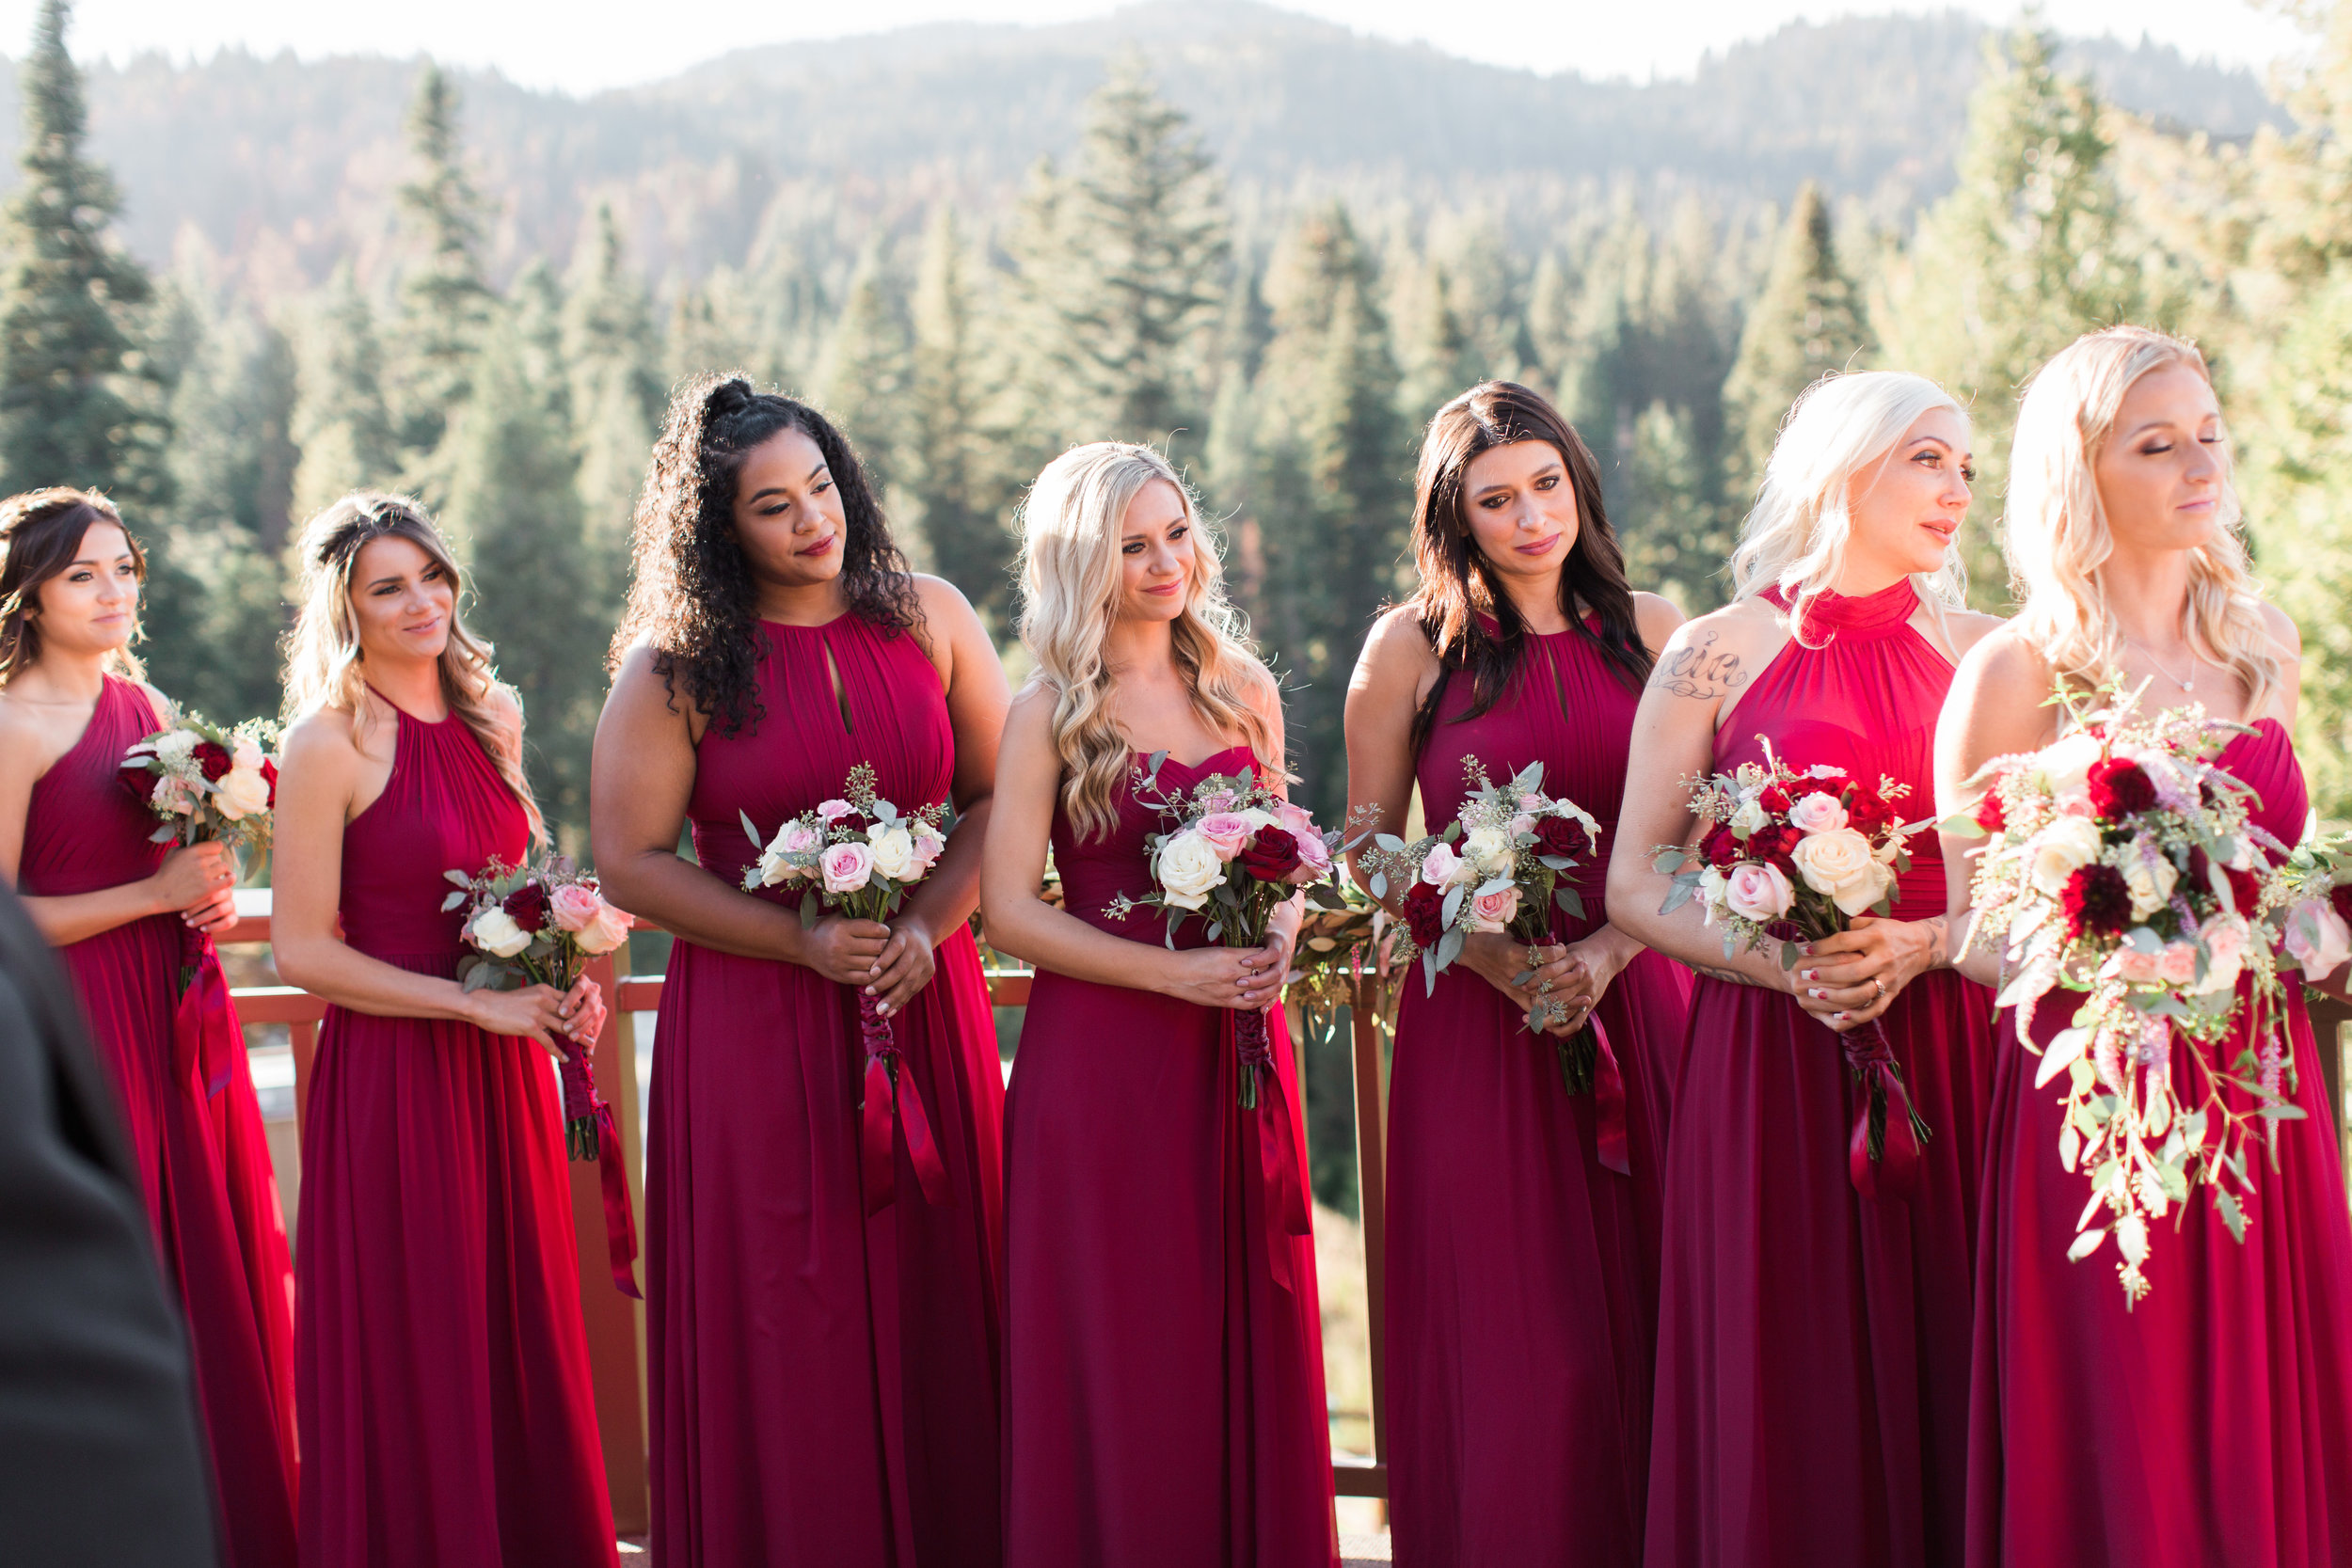 Yosemite-wedding-at-Tenaya-lodge-13.jpg